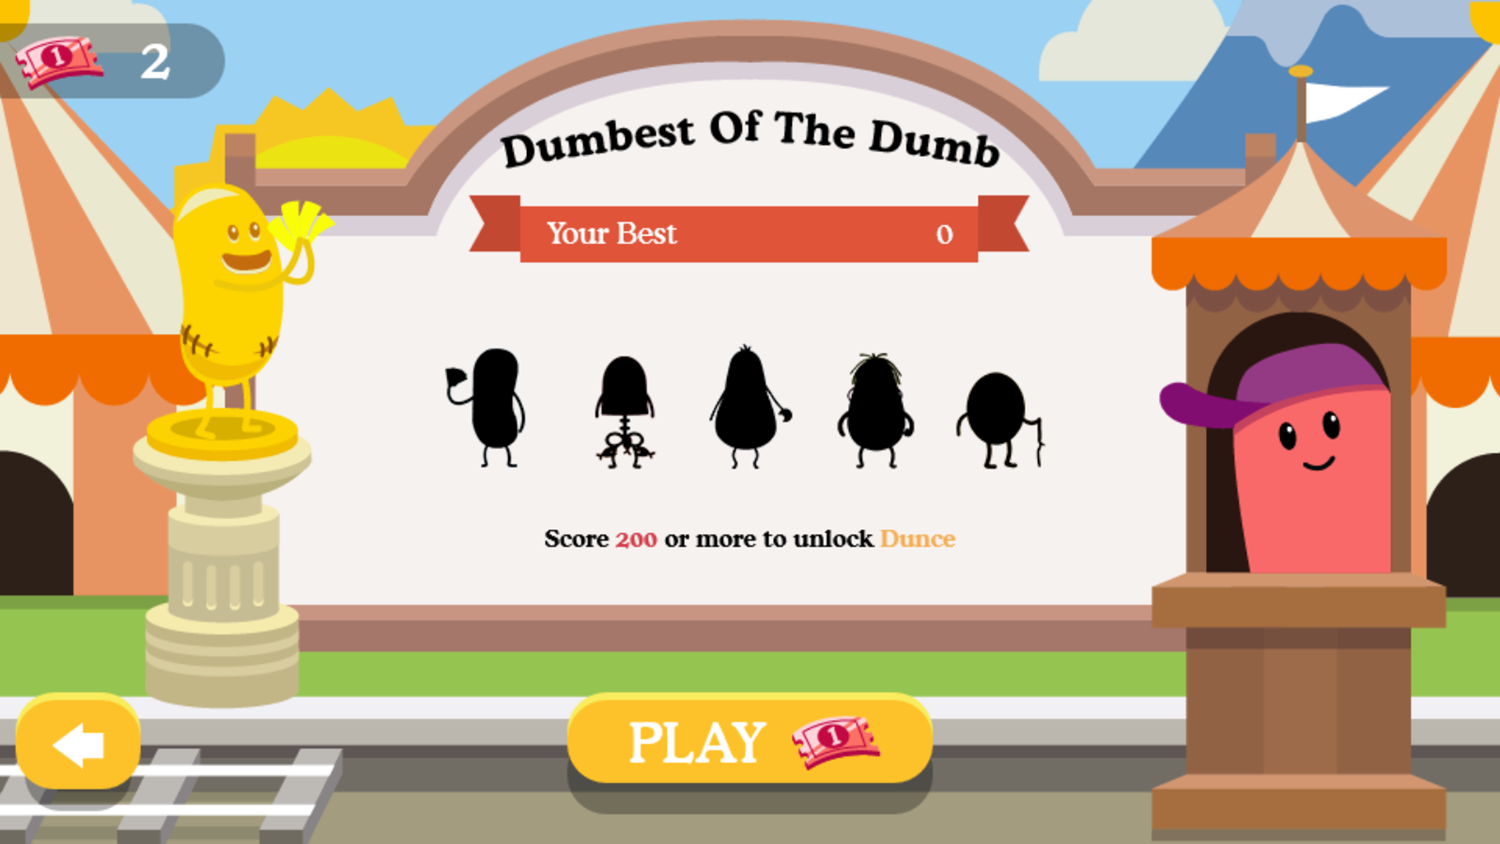 Dumb Ways to Die 2 The Games Game Dumbest of the Dumb Screenshot.